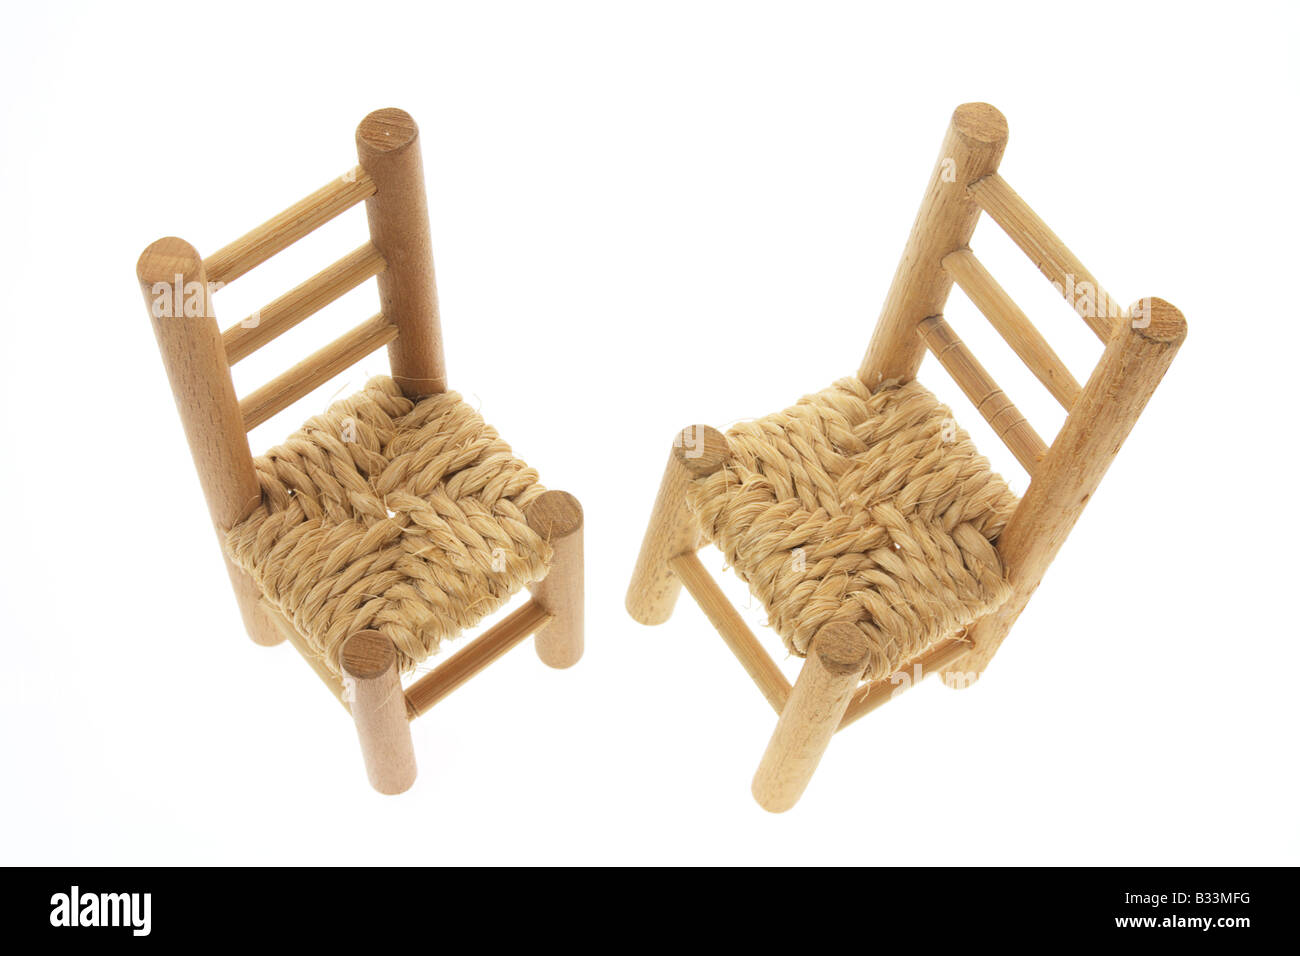 Miniatura di sedie in legno Foto stock - Alamy